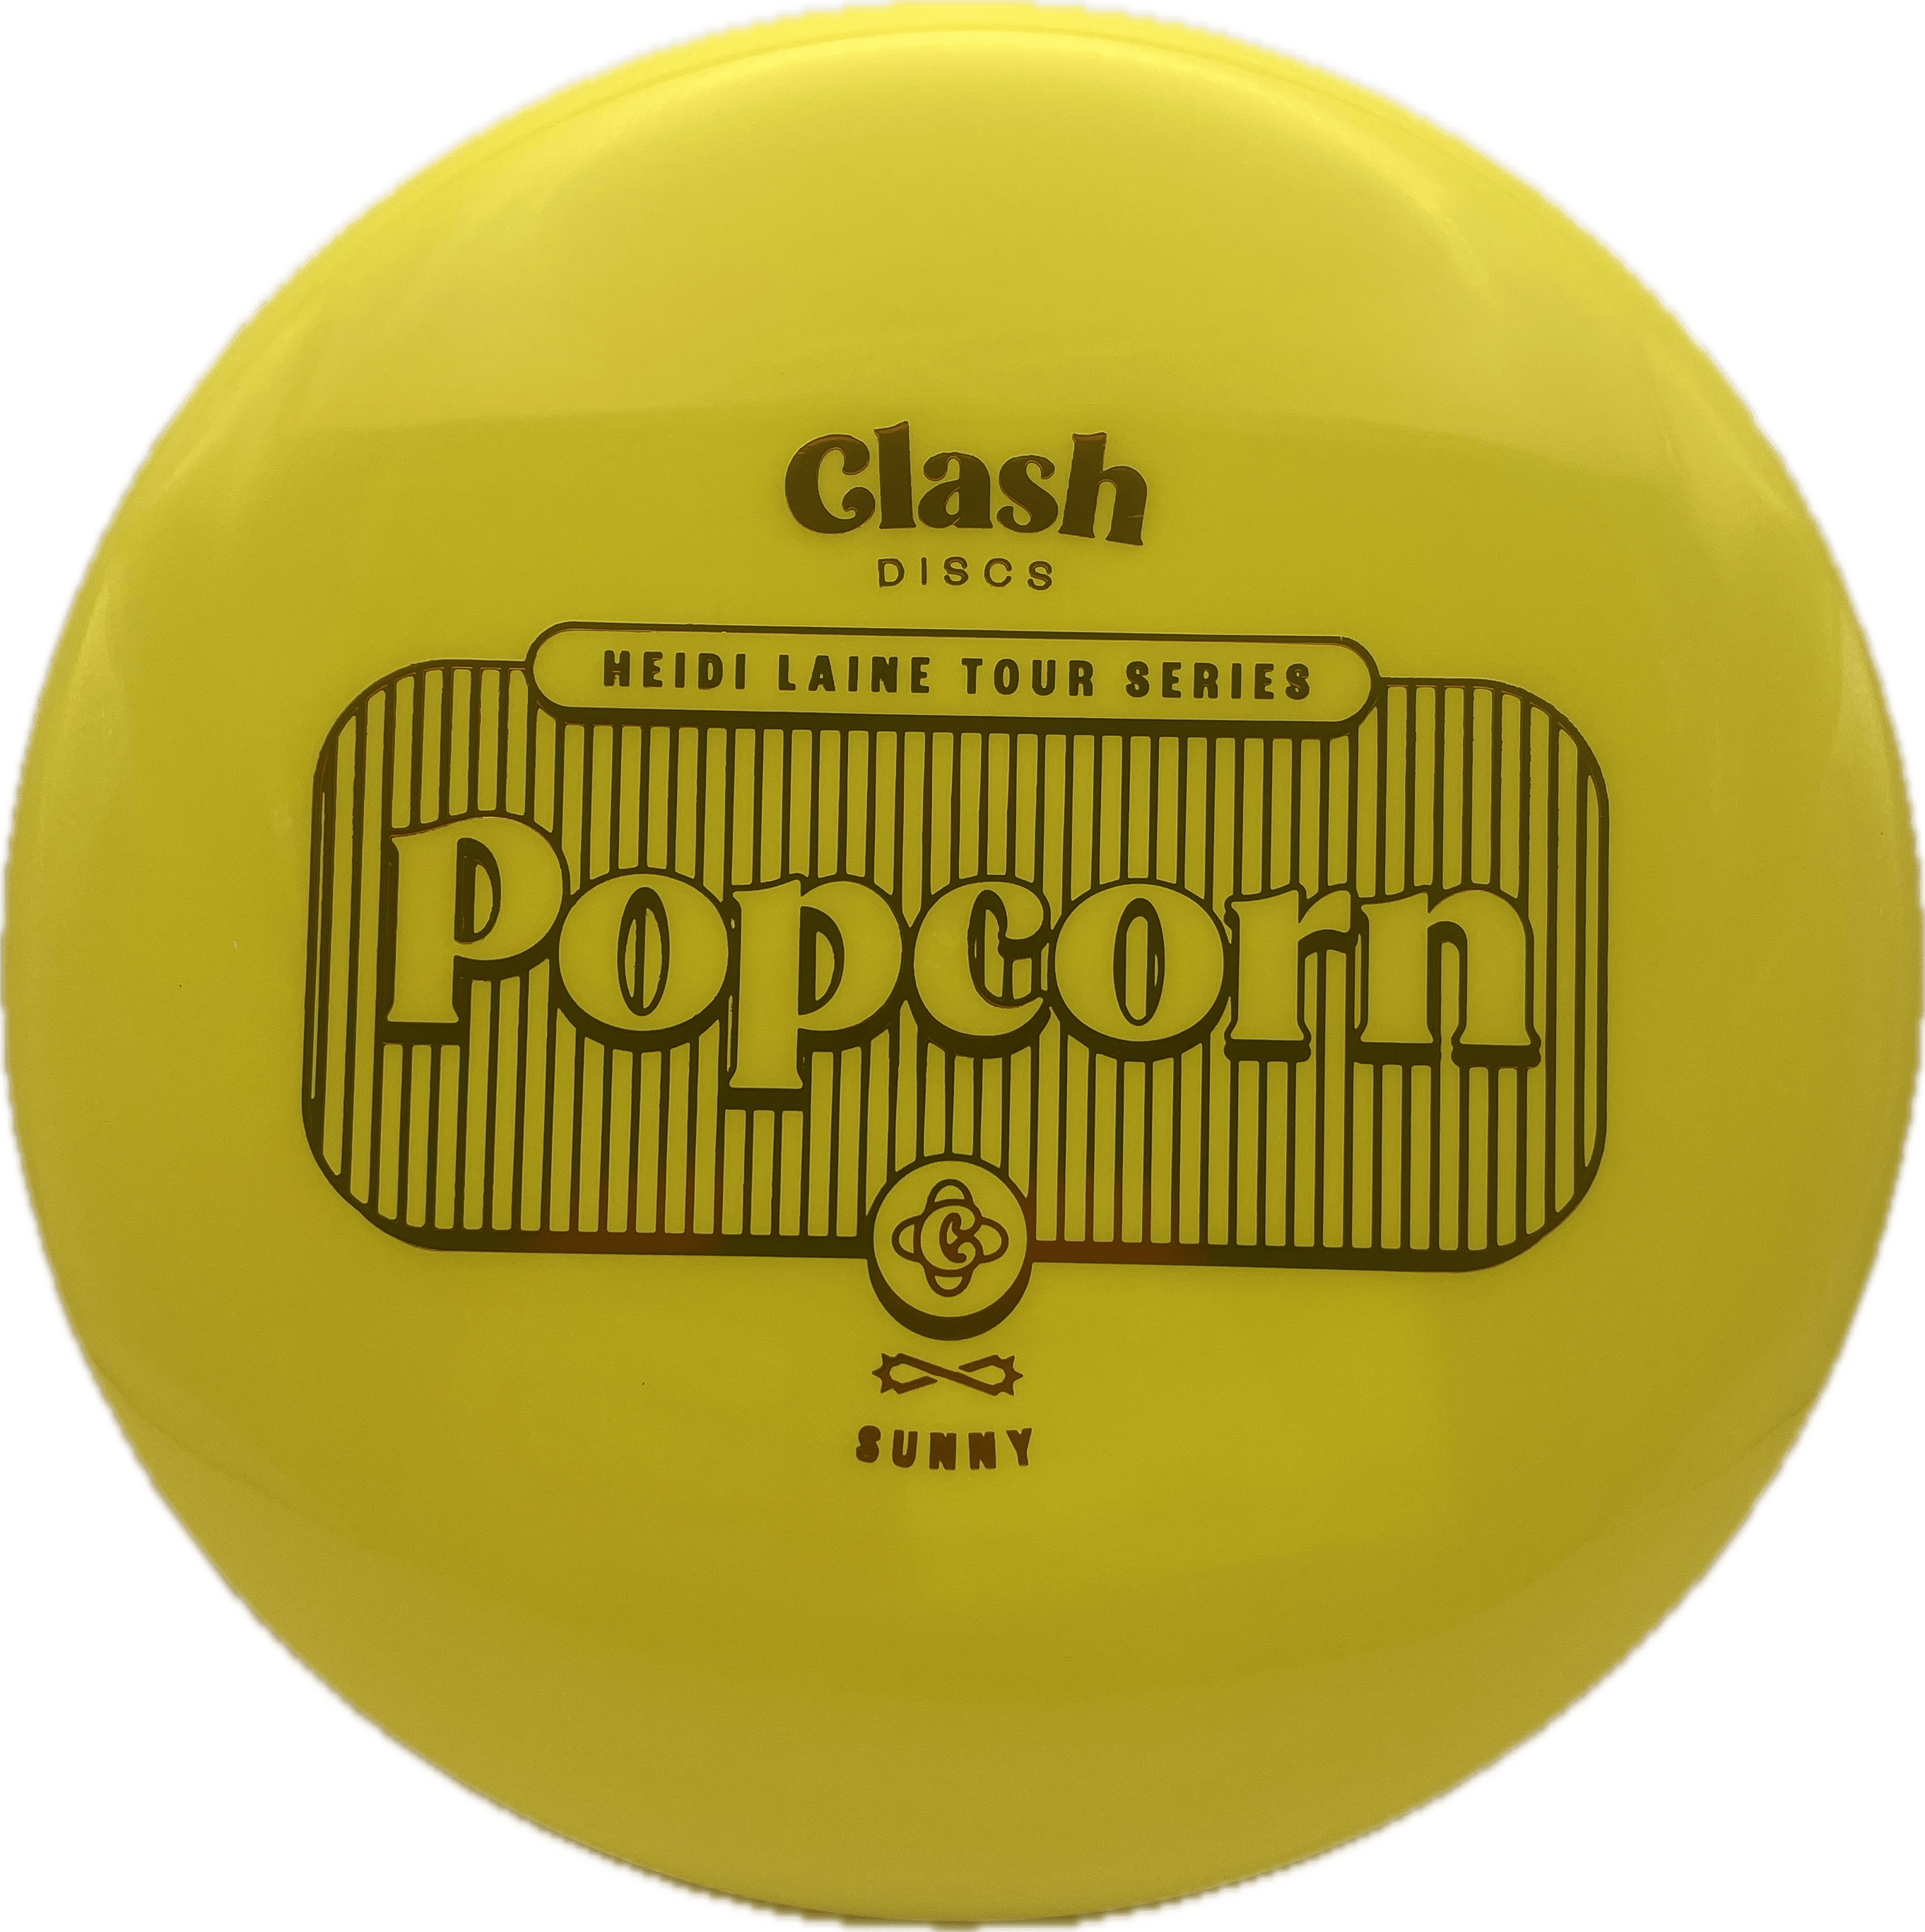 Clash Disc Clash Popcorn, Sunny, 177, Dayglow Yellow, Red Metallic